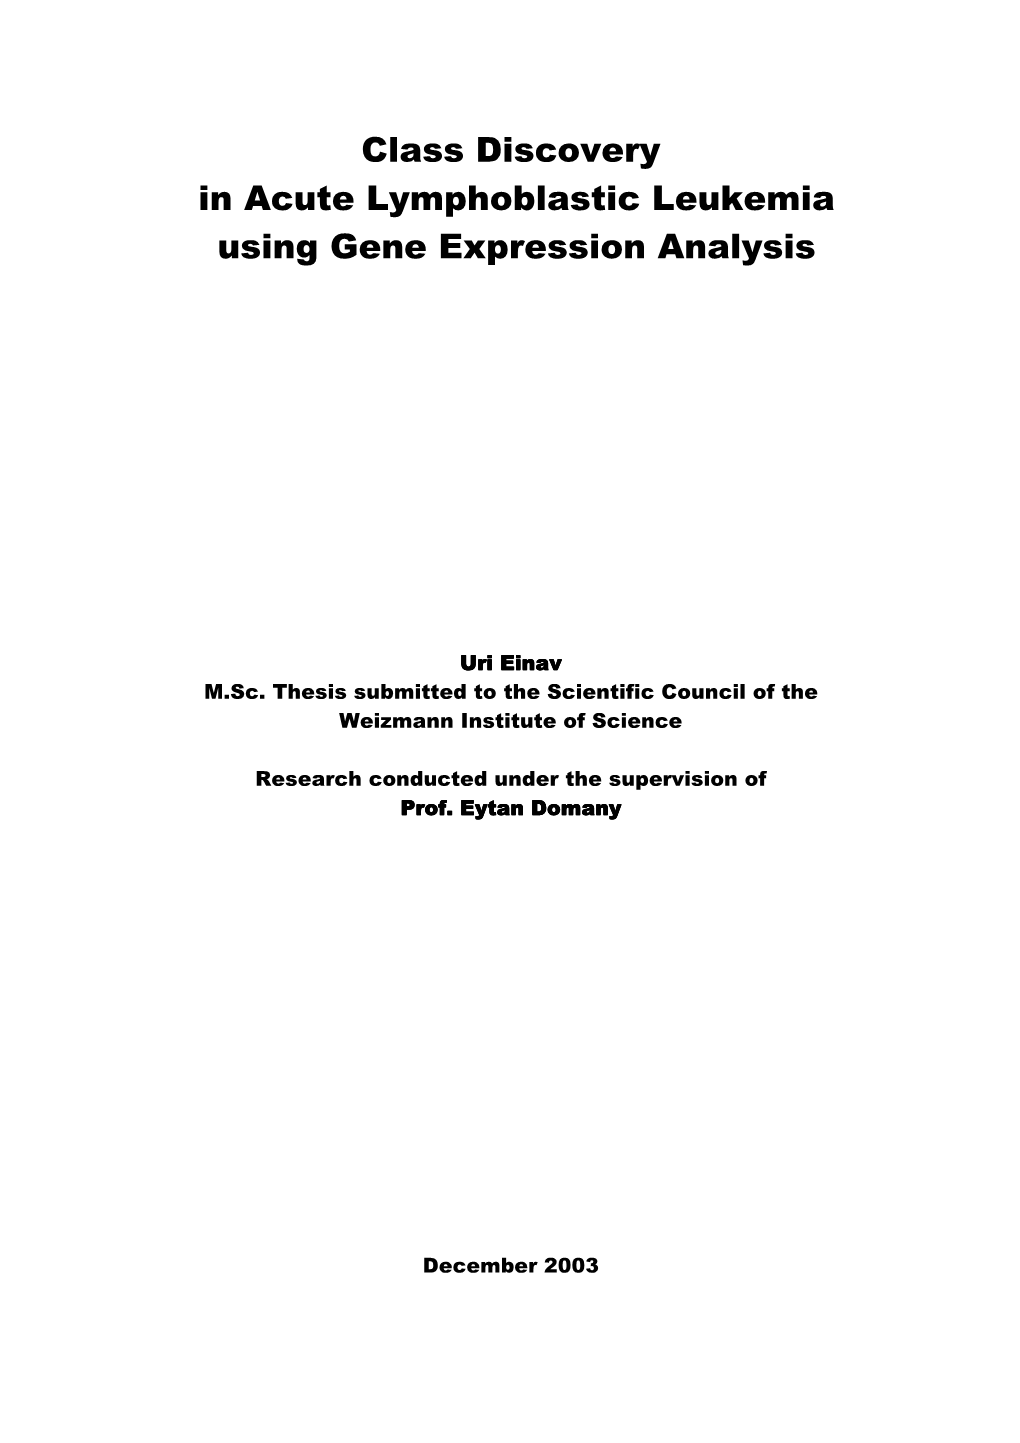 Class Discovery in Acute Lymphoblastic Leukemia Using Gene Expression Analysis